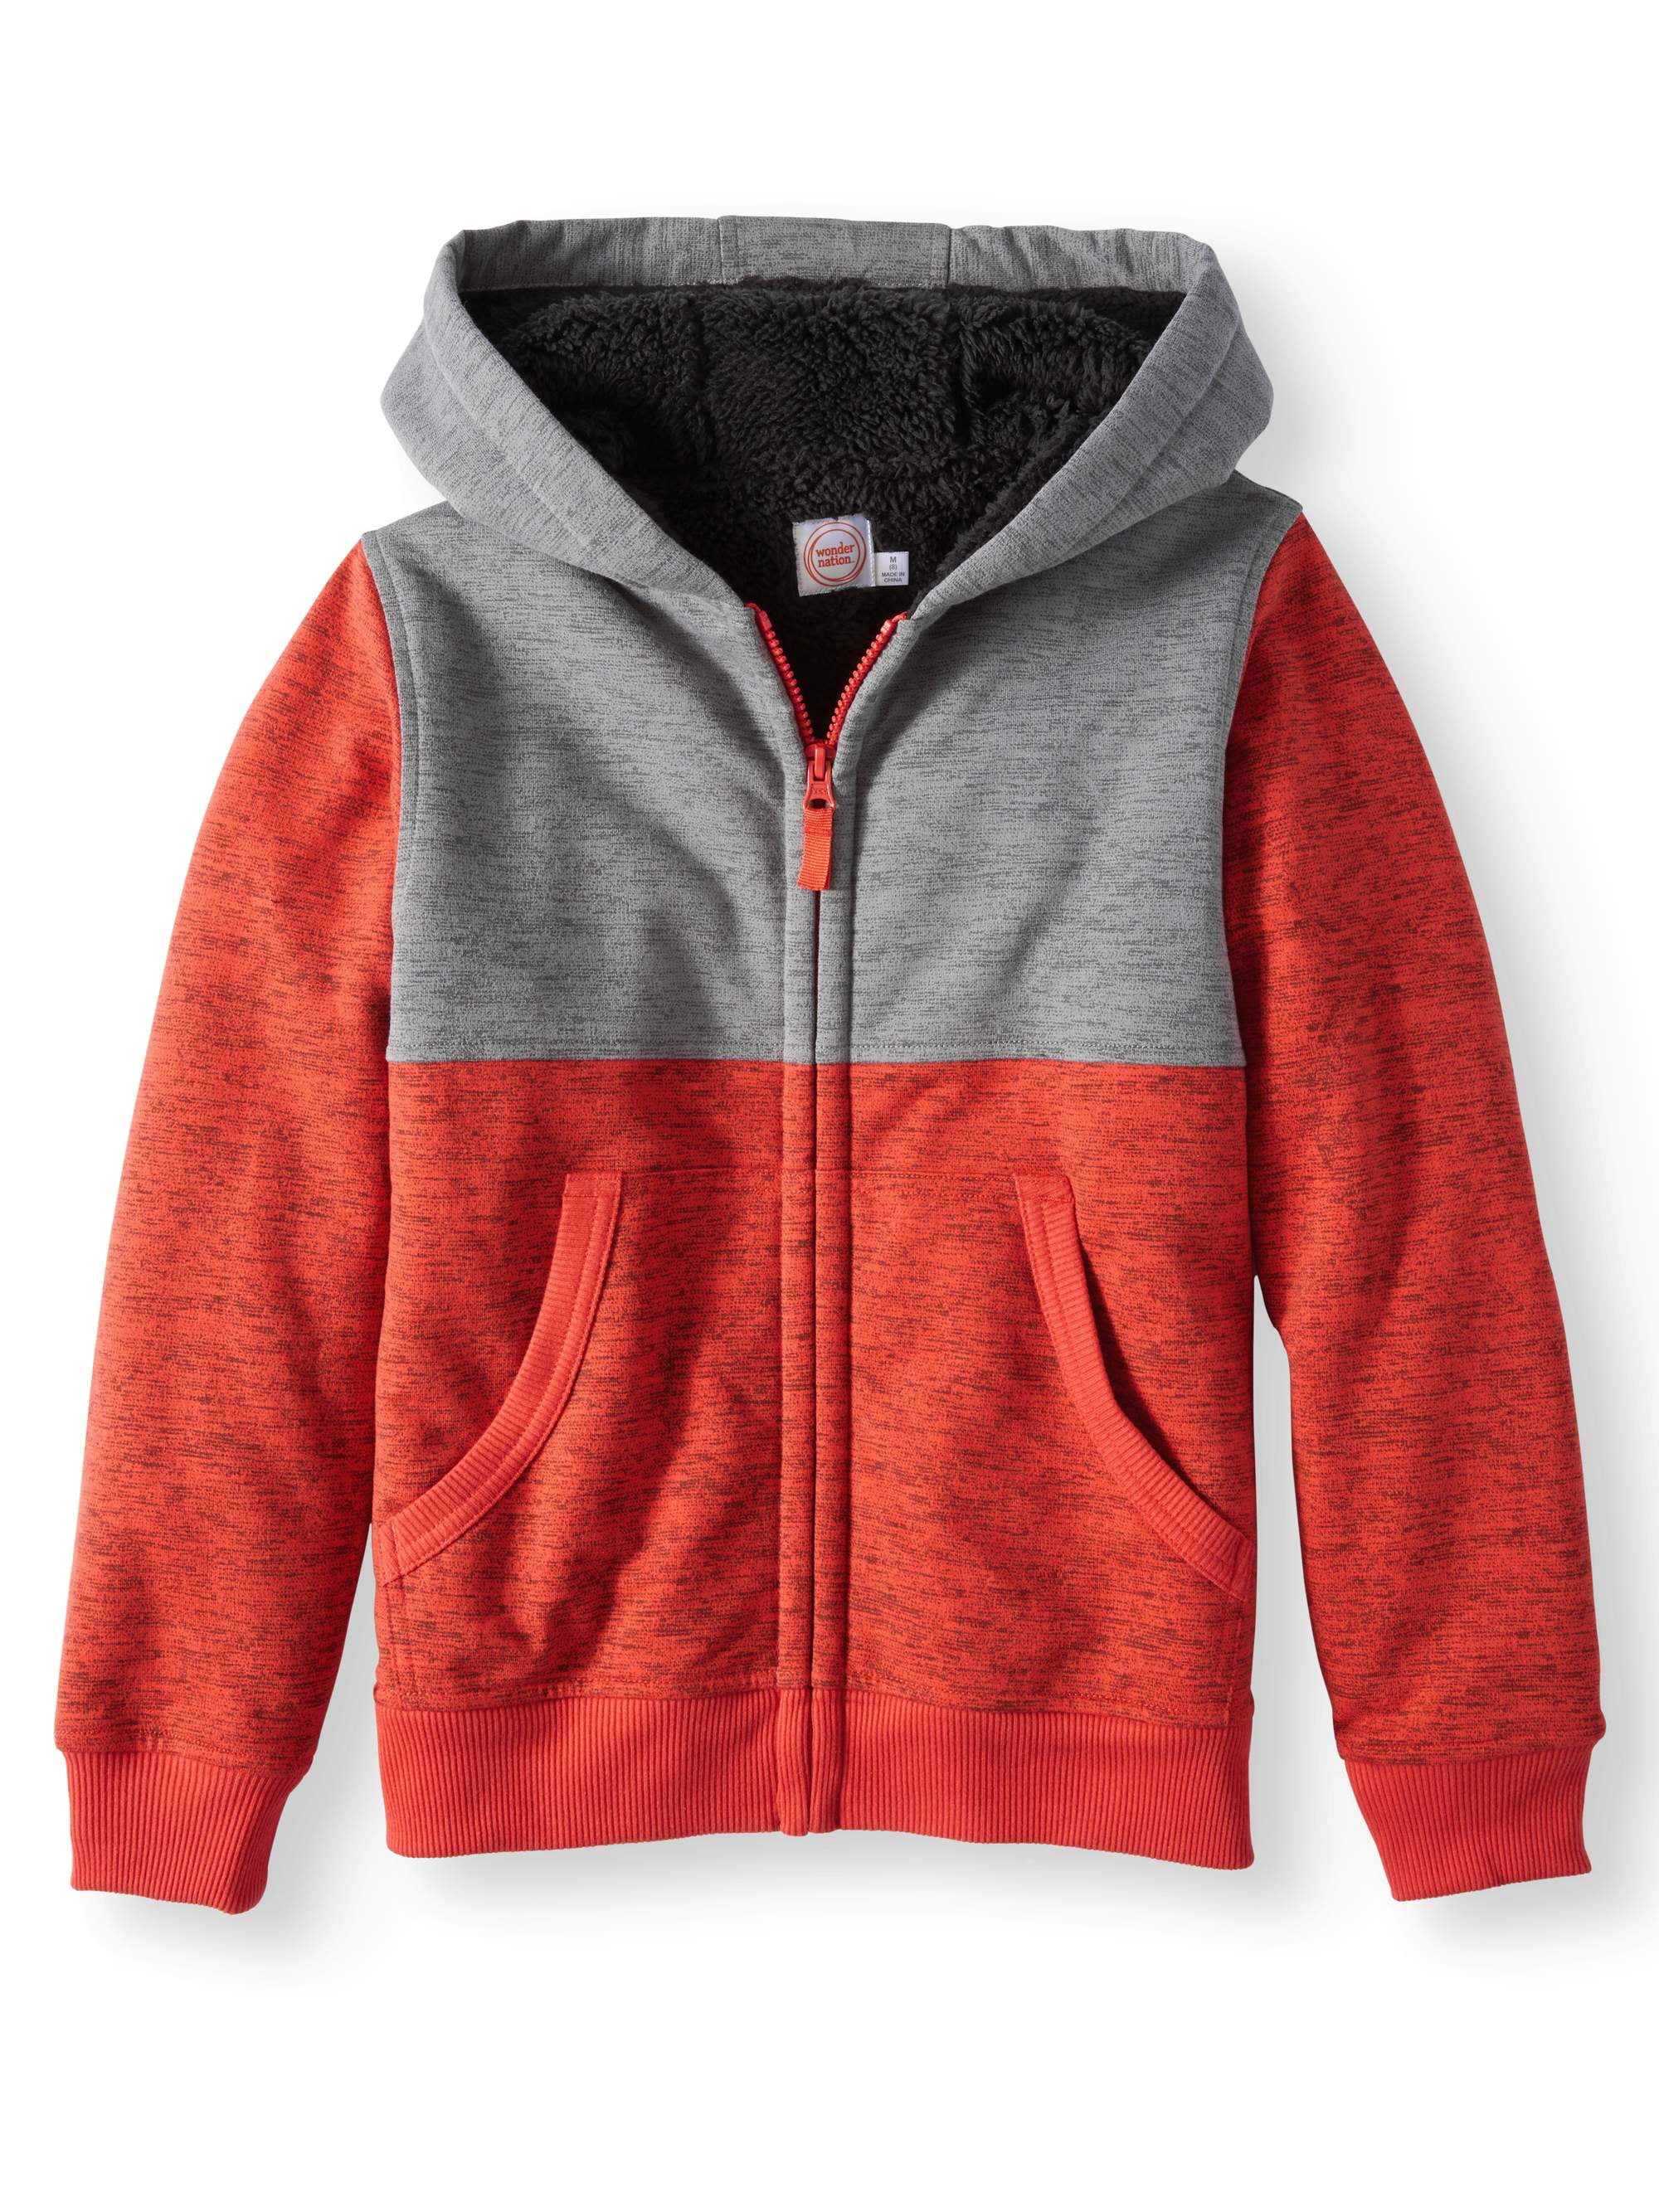 Gap Kids Boys Hoodie Zip Up Jacket Faux Fur Sherpa Lined Sweatshirt S M L Xl New 